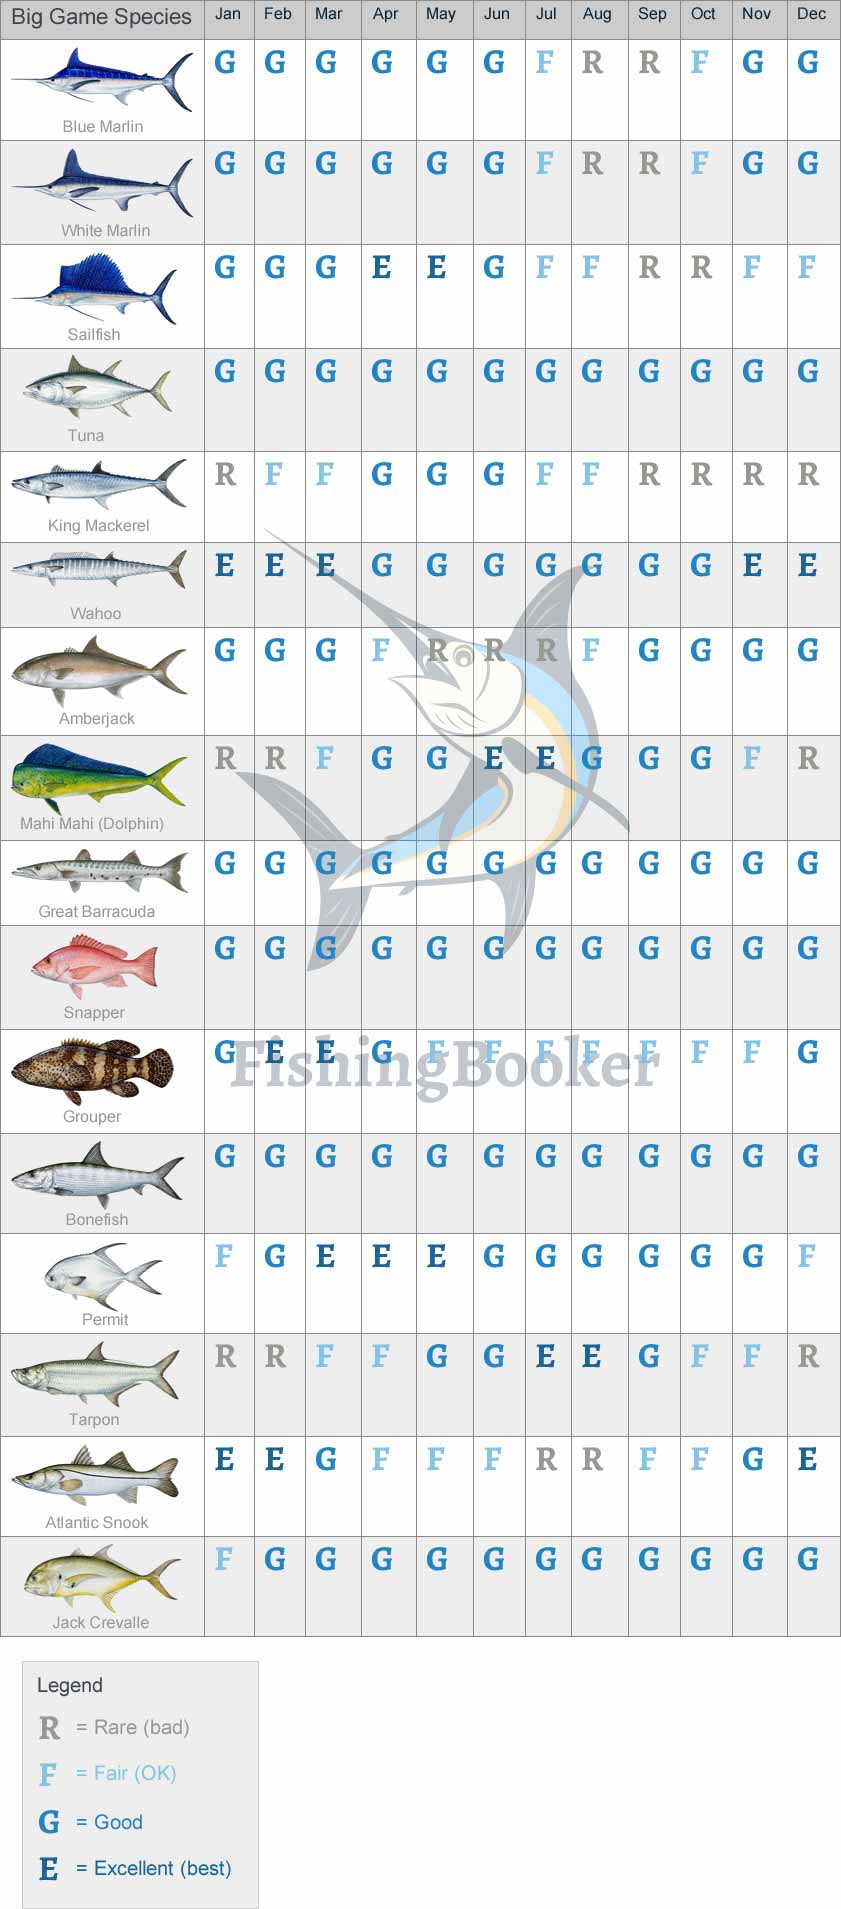 fishing_calendar_belize